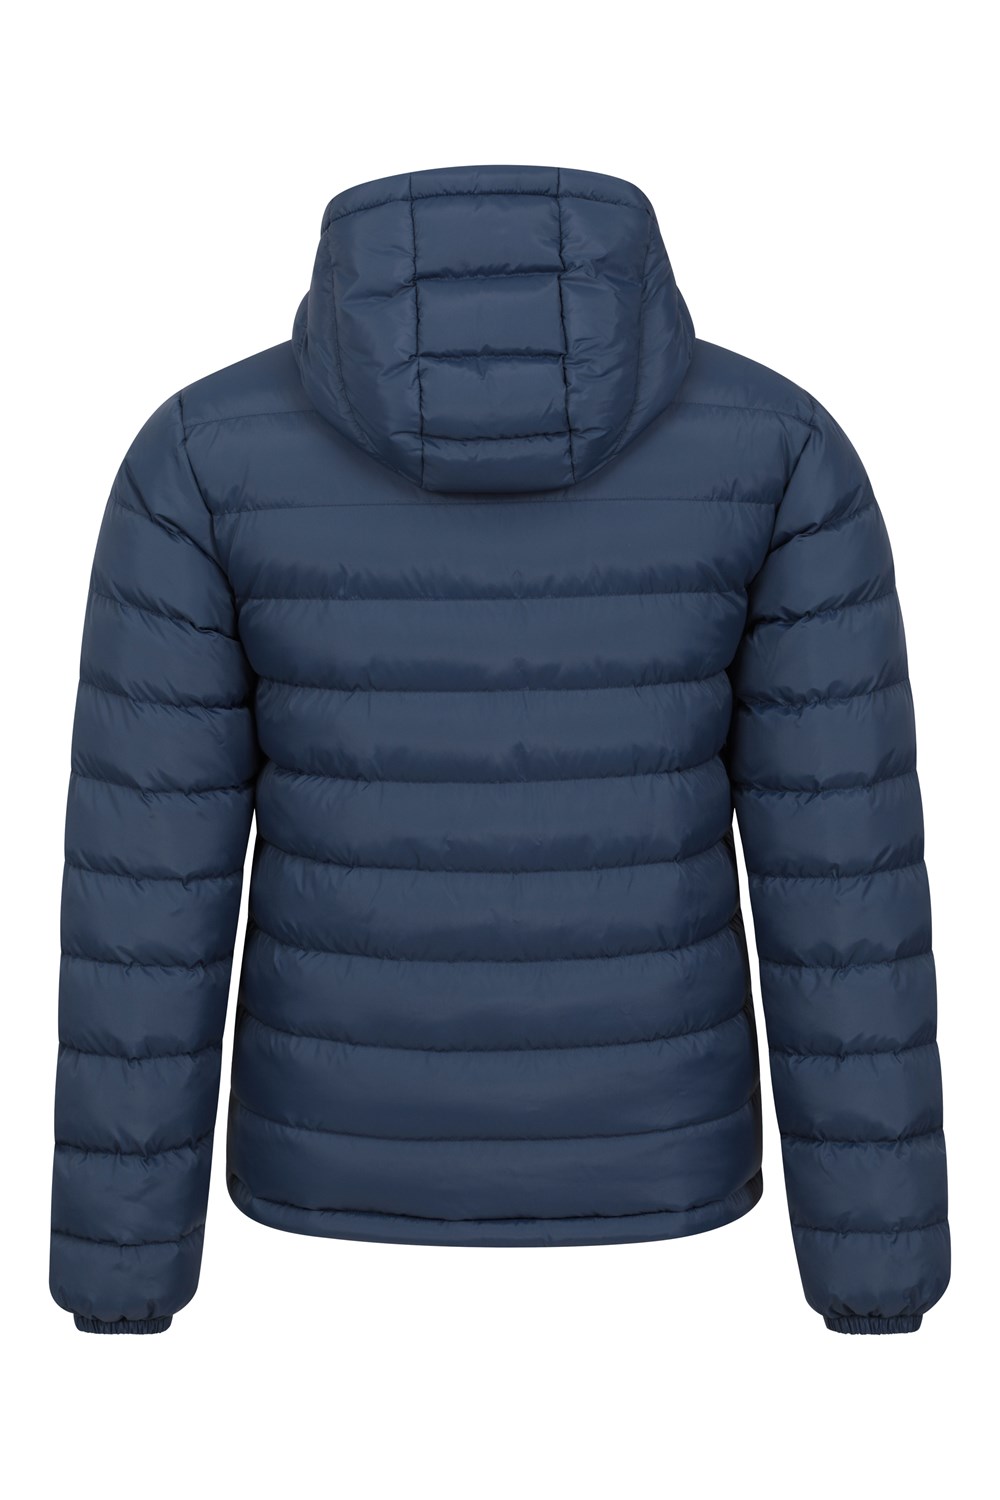 Mountain Warehouse Seasons Men's Padded Warm Jacket Water Resistant ...